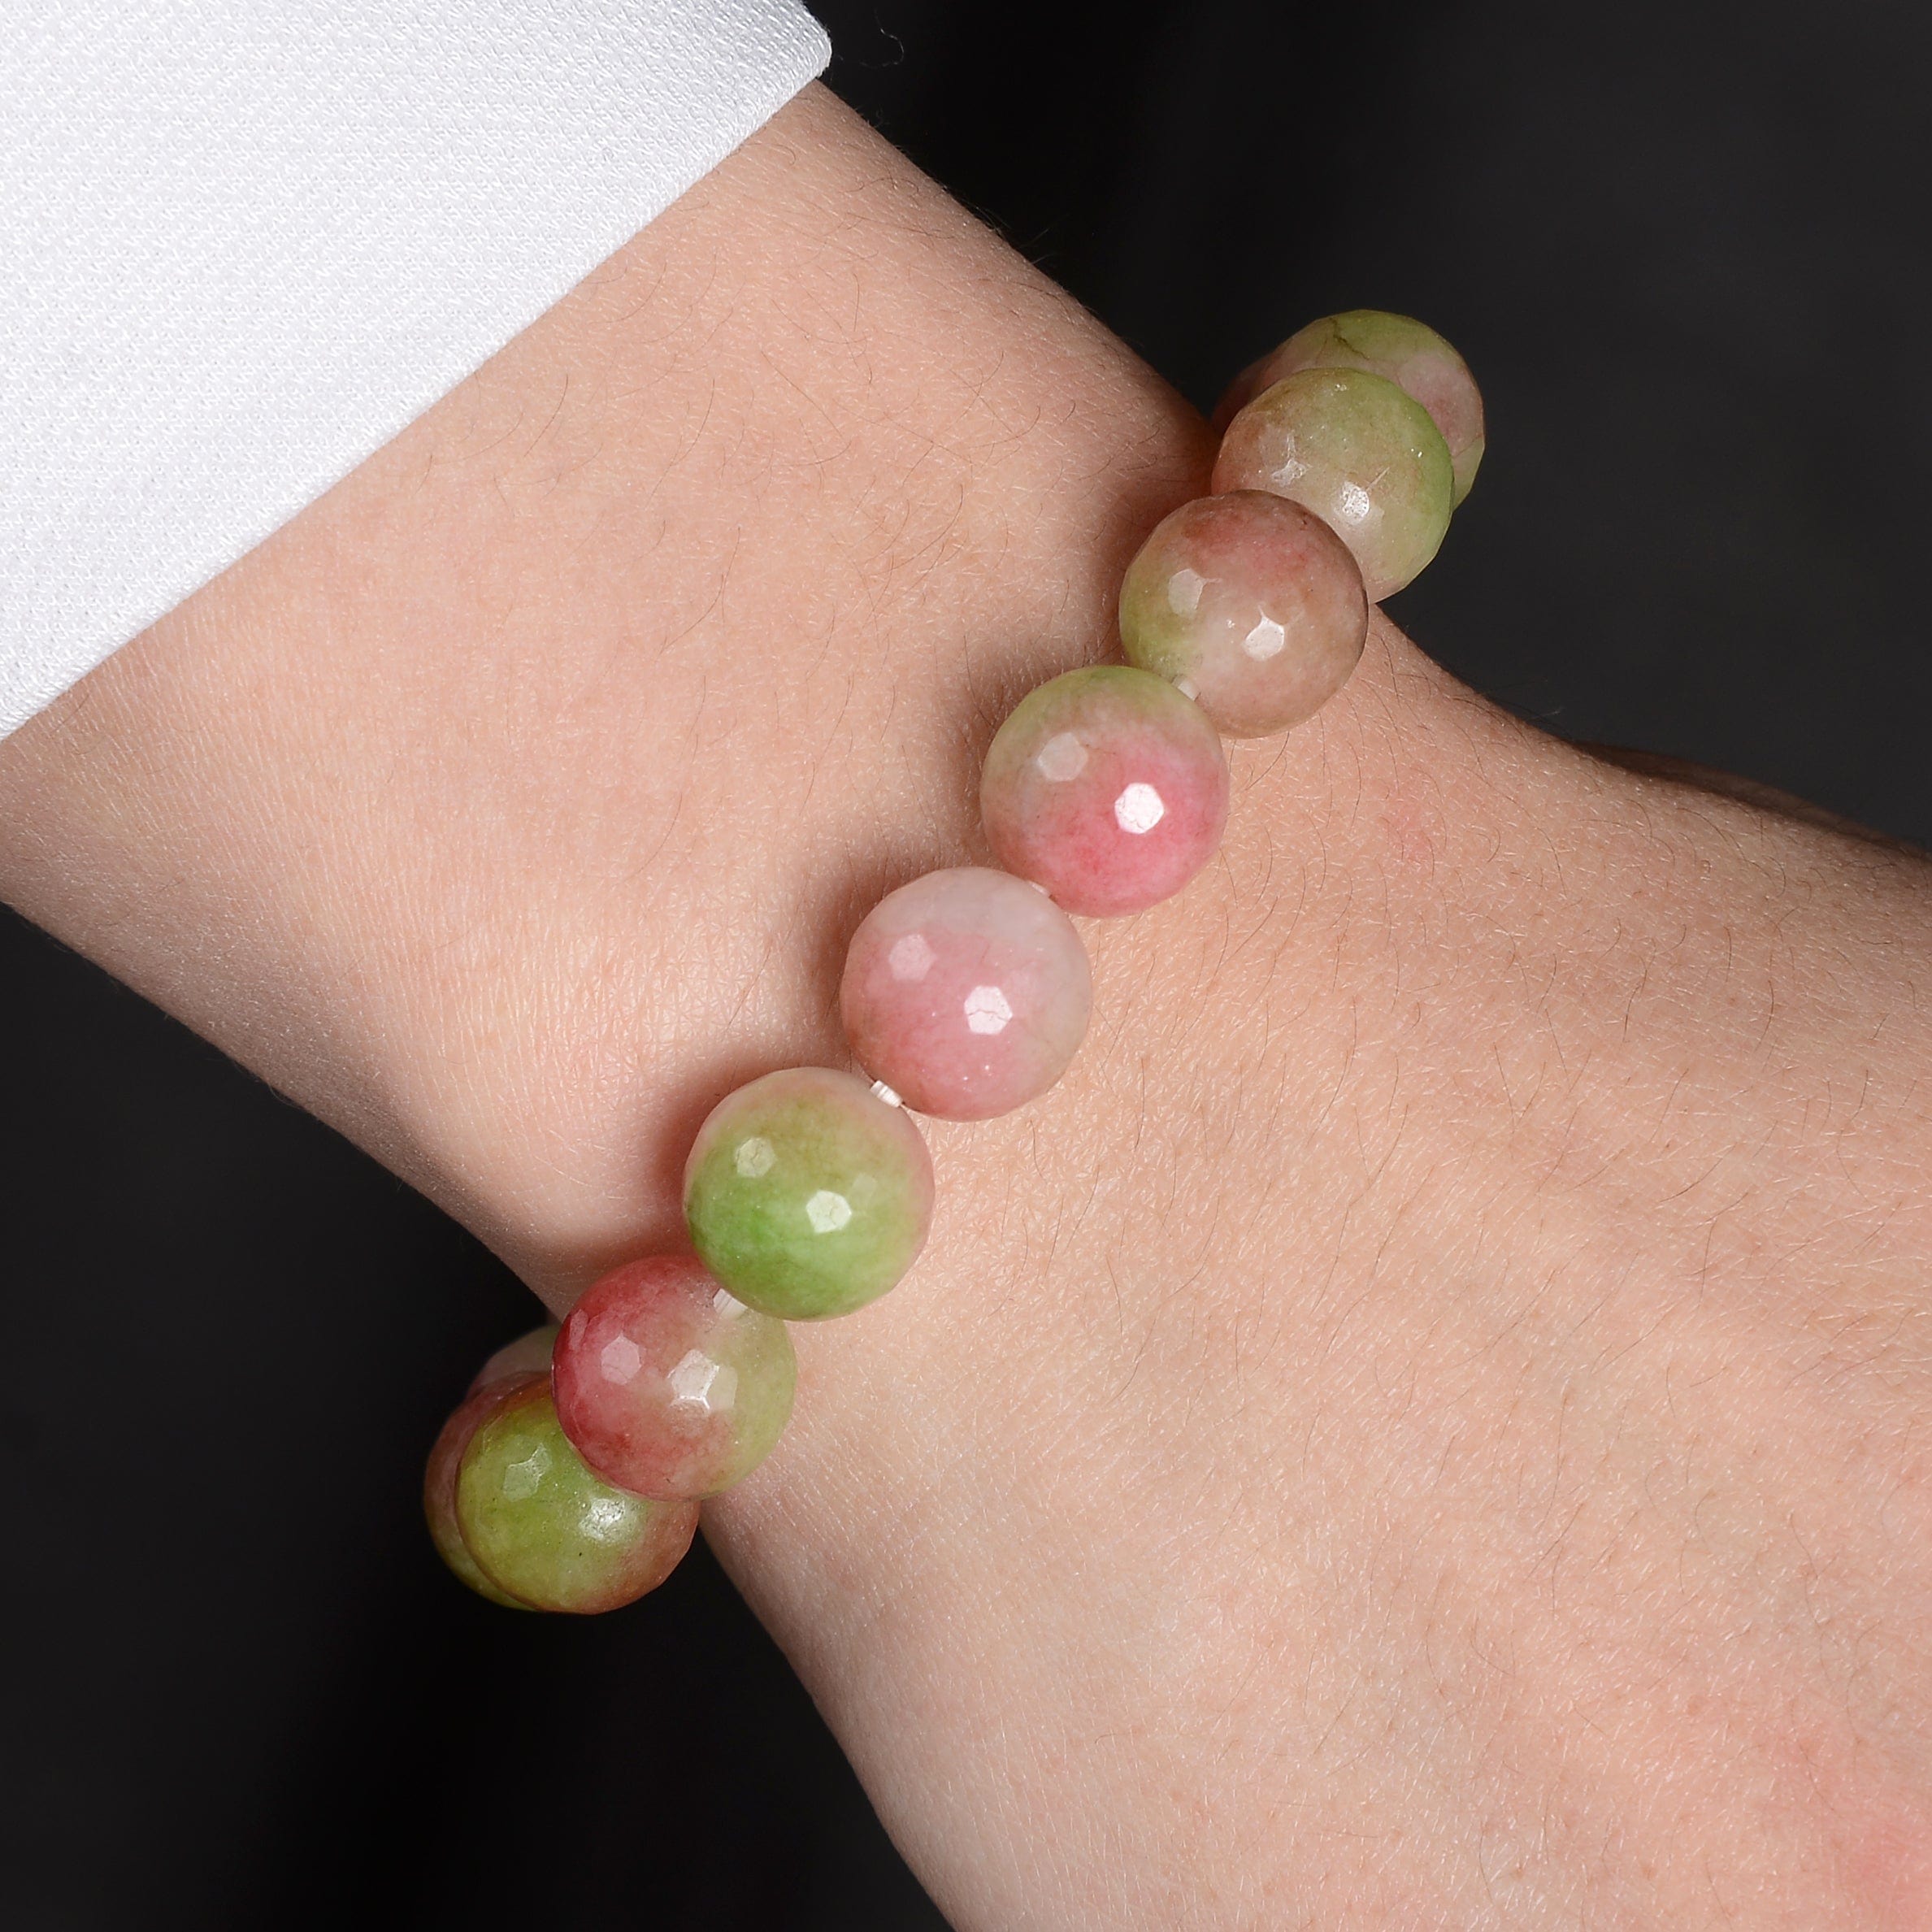 Kalifano Gemstone Bracelets Pink & Green Agate Faceted Natural Gemstone Bead Elastic Bracelet PLAT-BGP-031